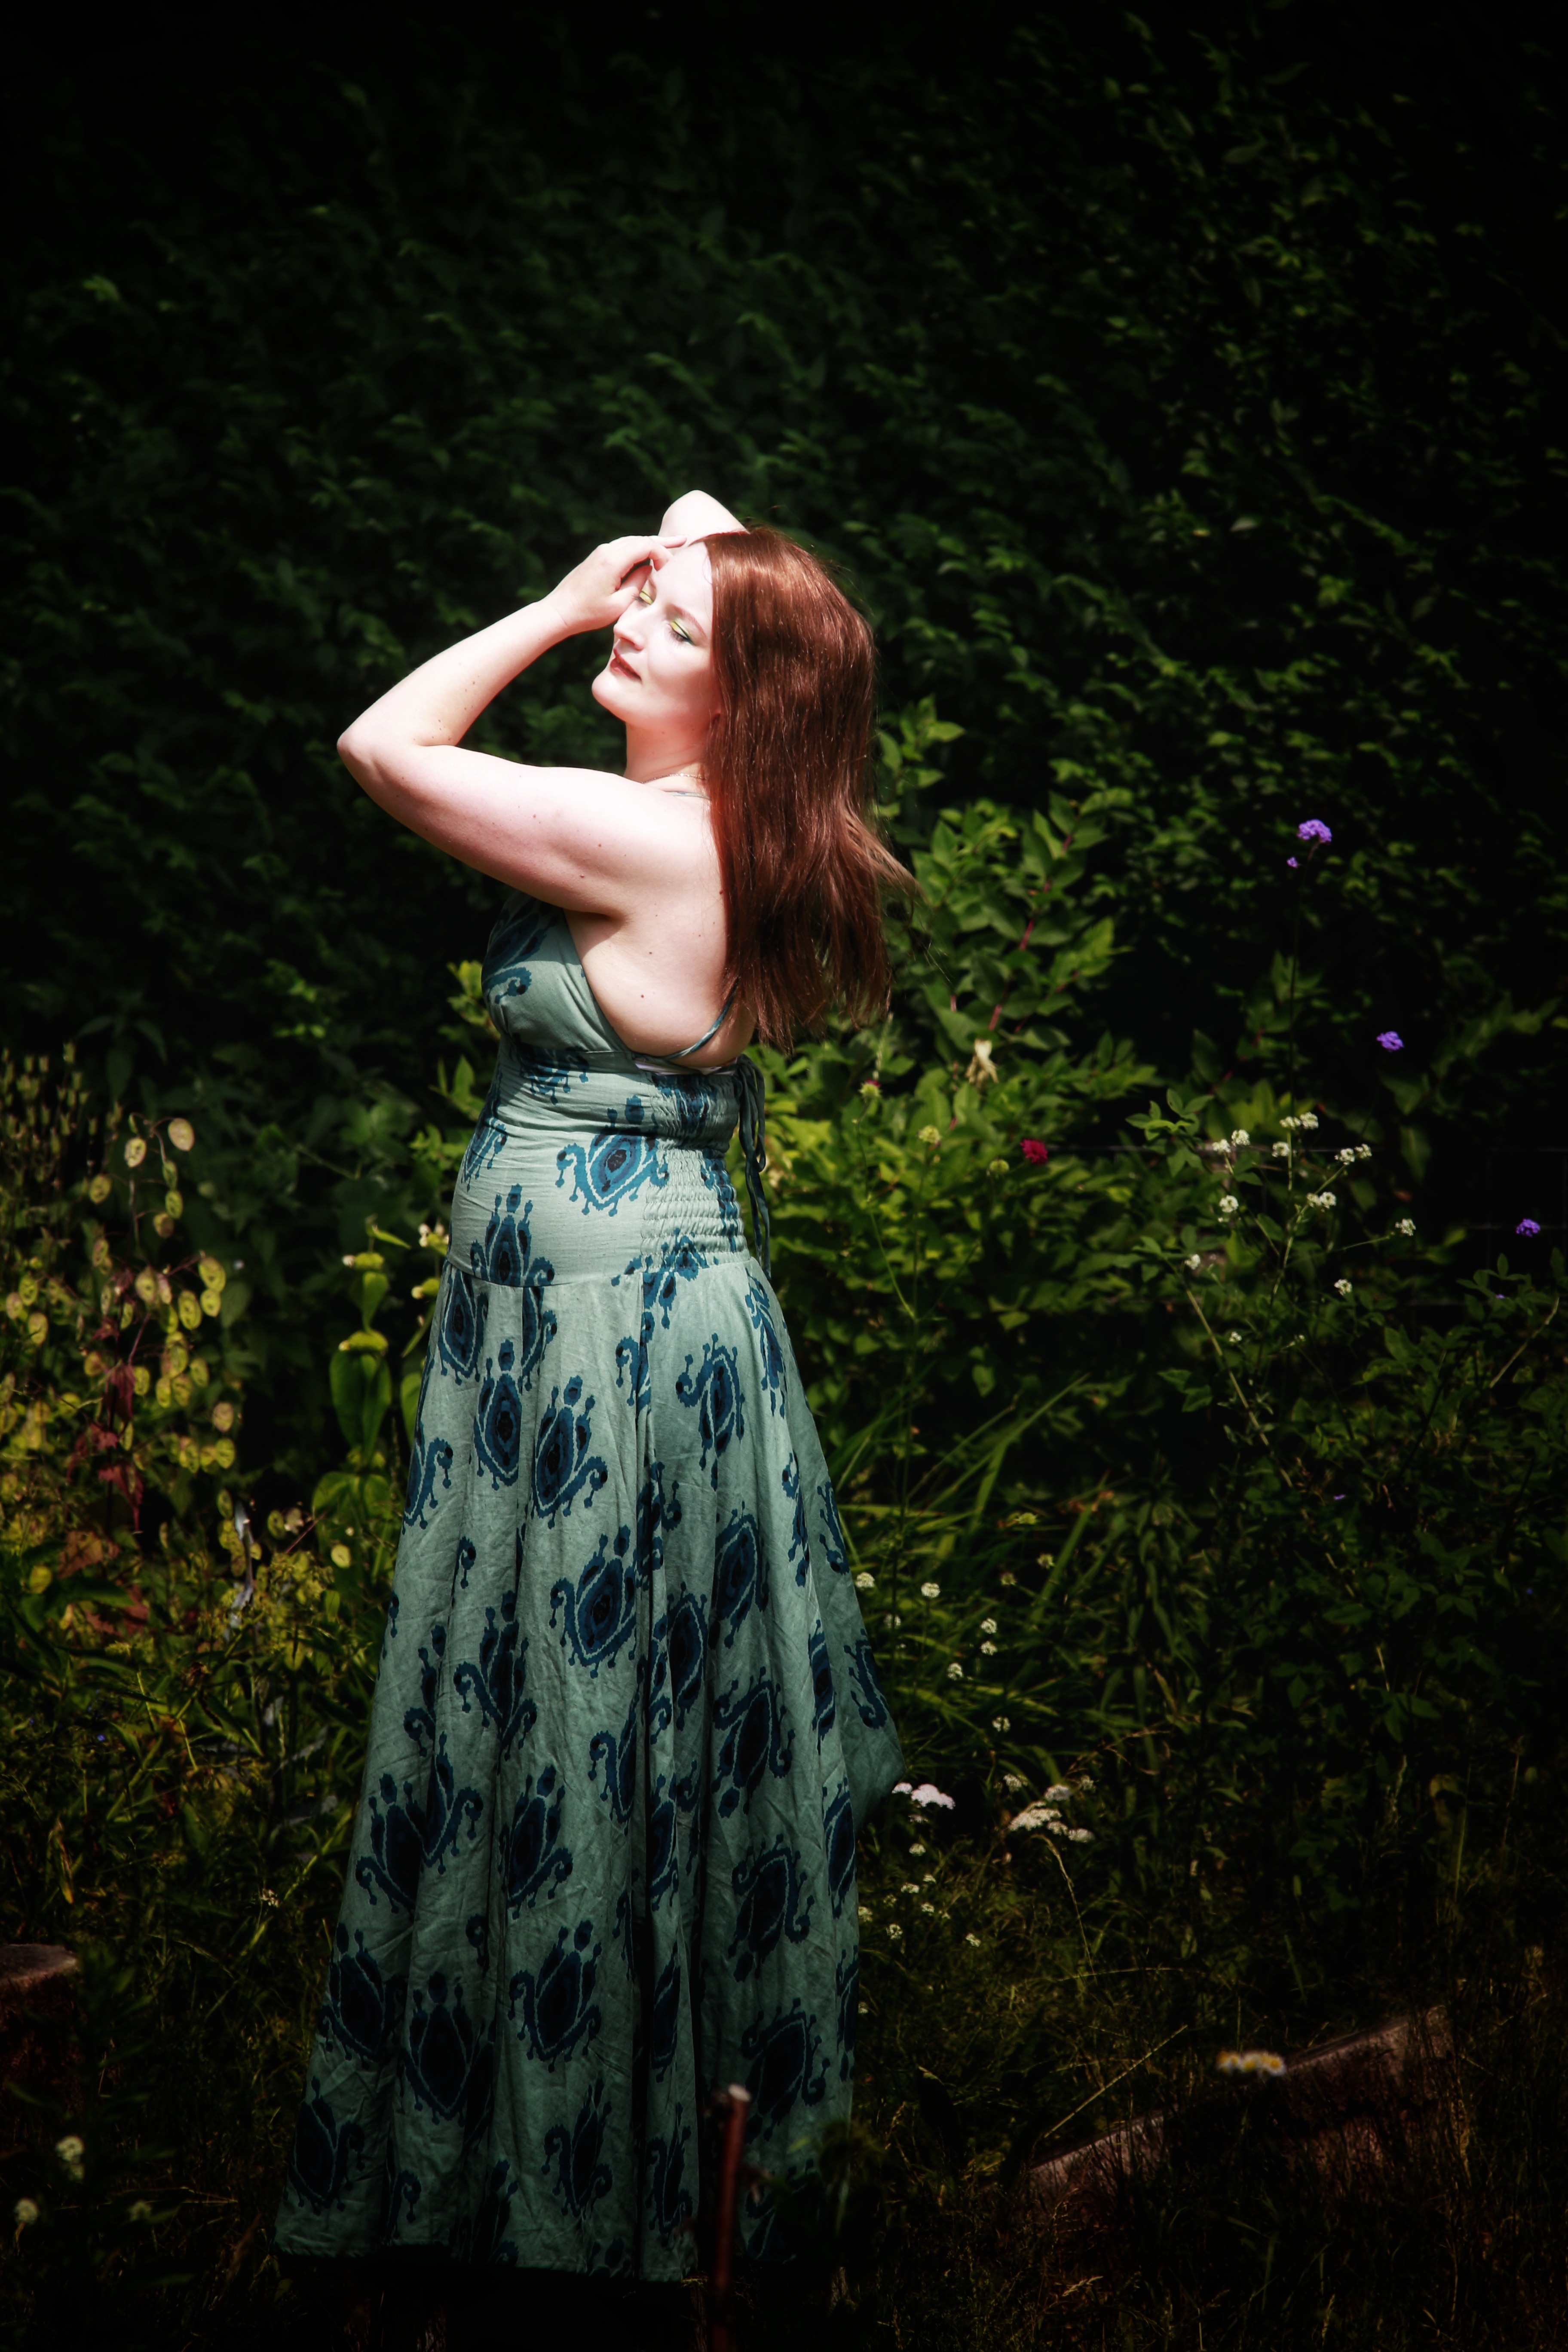 fotograaf Pixzl Photography - Model Yasmine
Locatie Sonsbeek Park Arnhem